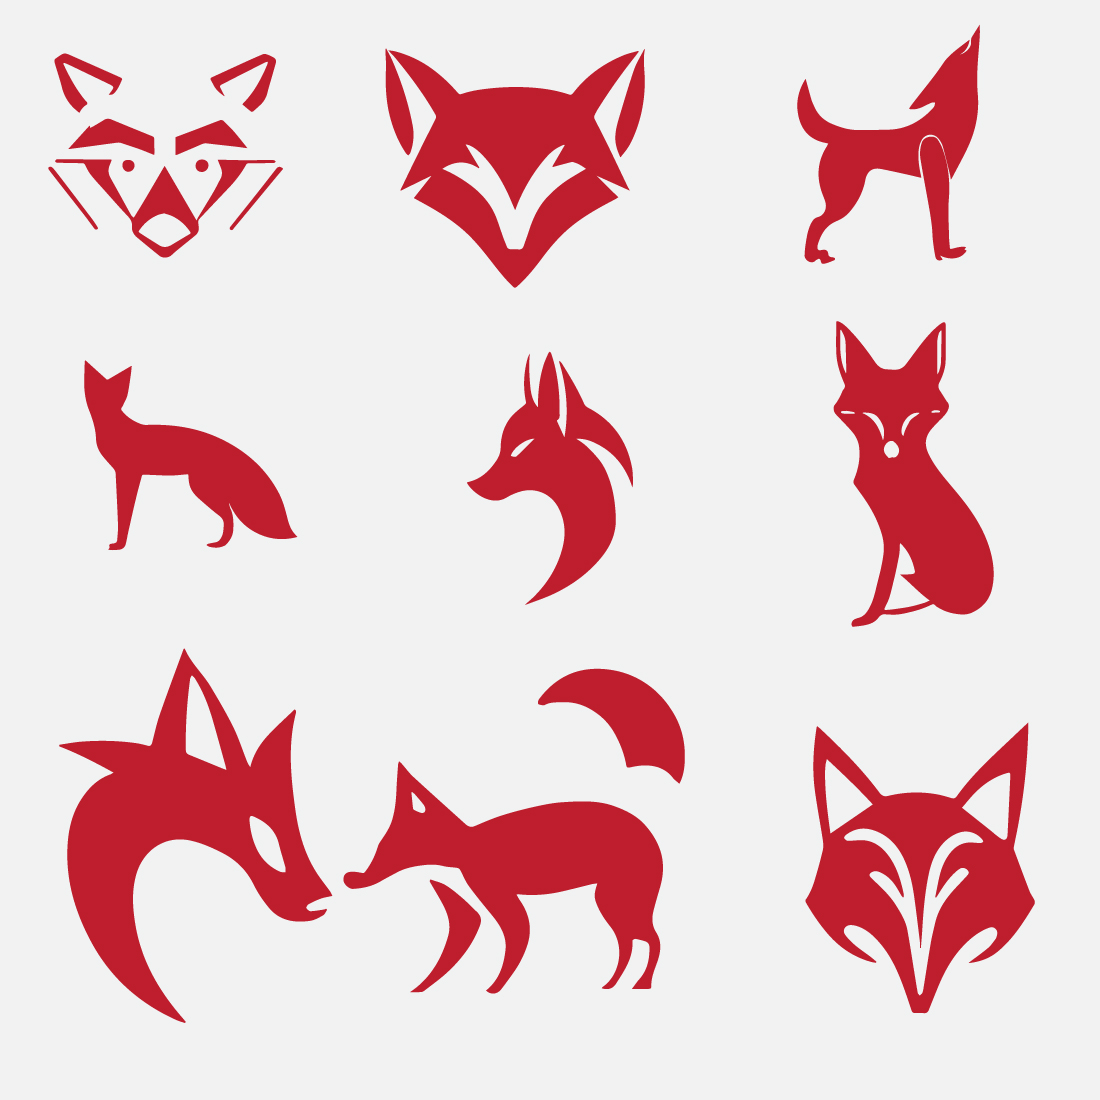 fox logo preview image.